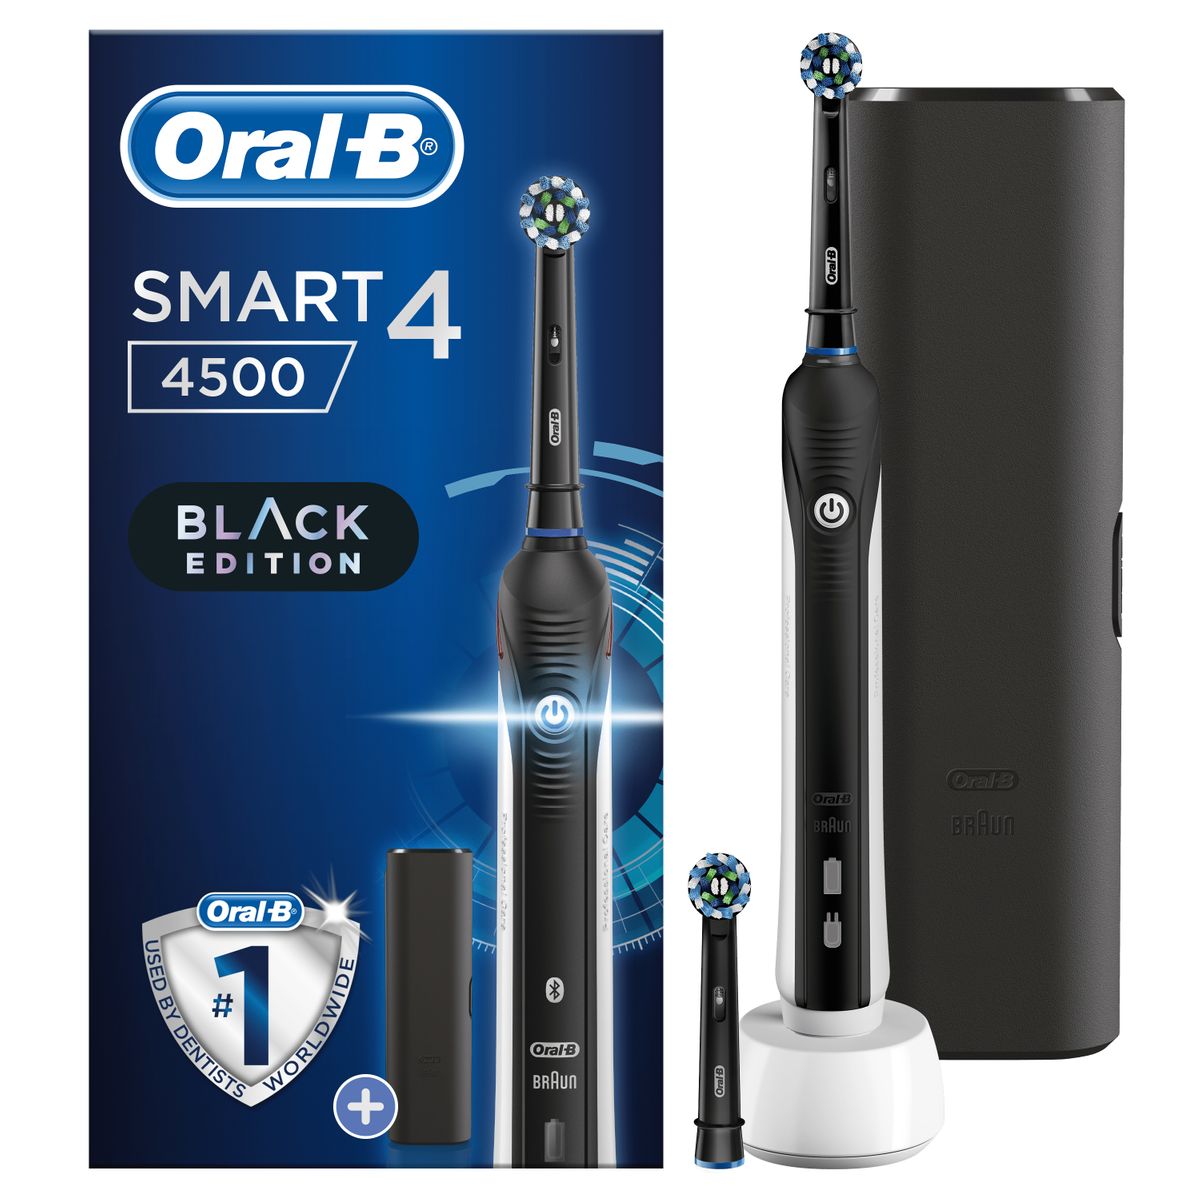 Oral-B Smart 4 4500 CrossAction - Electric brush 1 black, 3 modes: bleached, sensitive, gum care